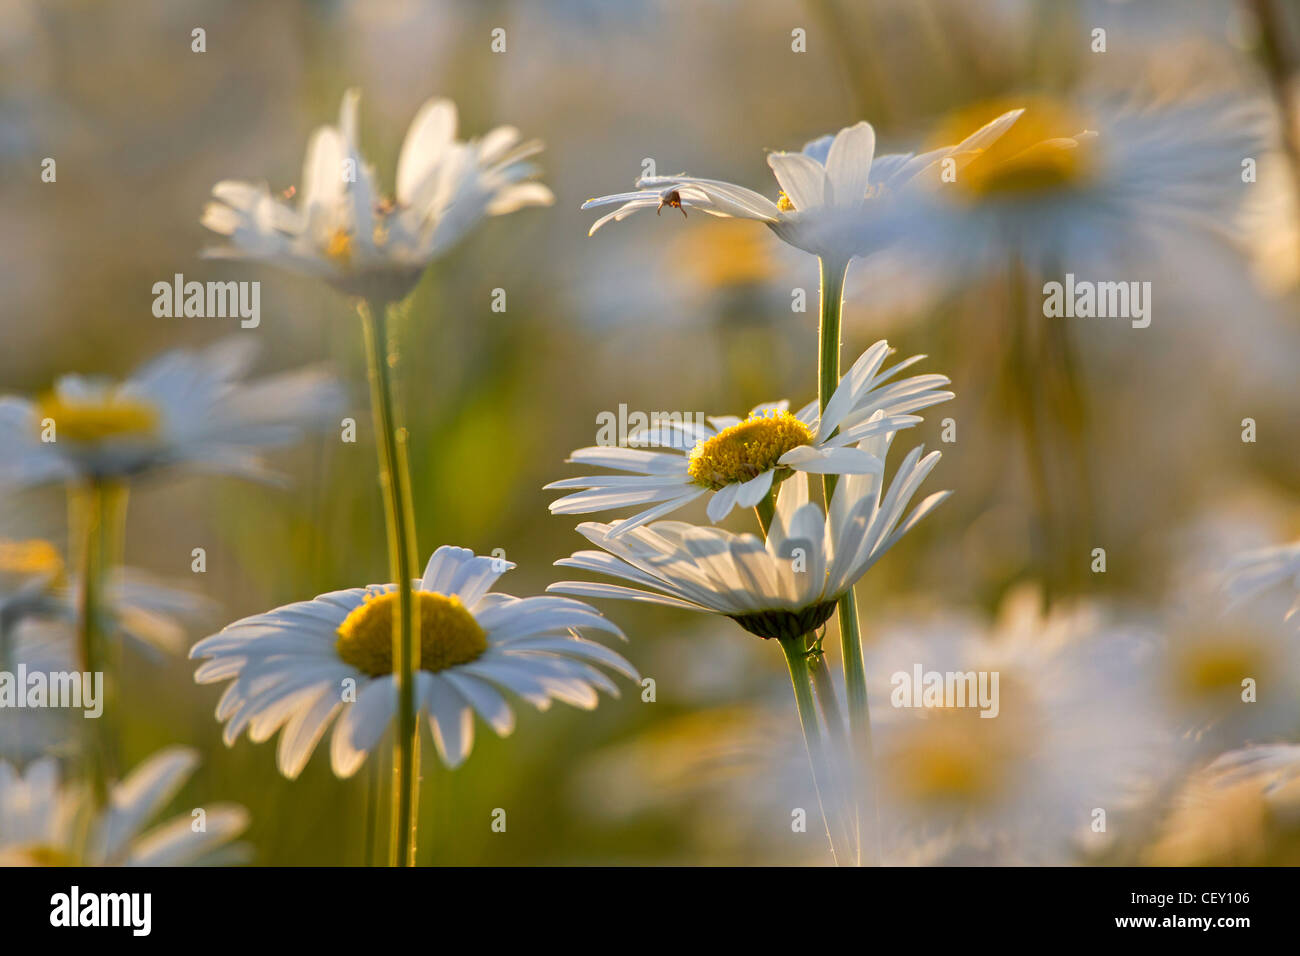 Oxeye daisy / Ox-eye Daisy / Moon daisies (Leucanthemum vulgare / Chrysanthemum leucanthemum) flowering in meadow, Germany Stock Photo